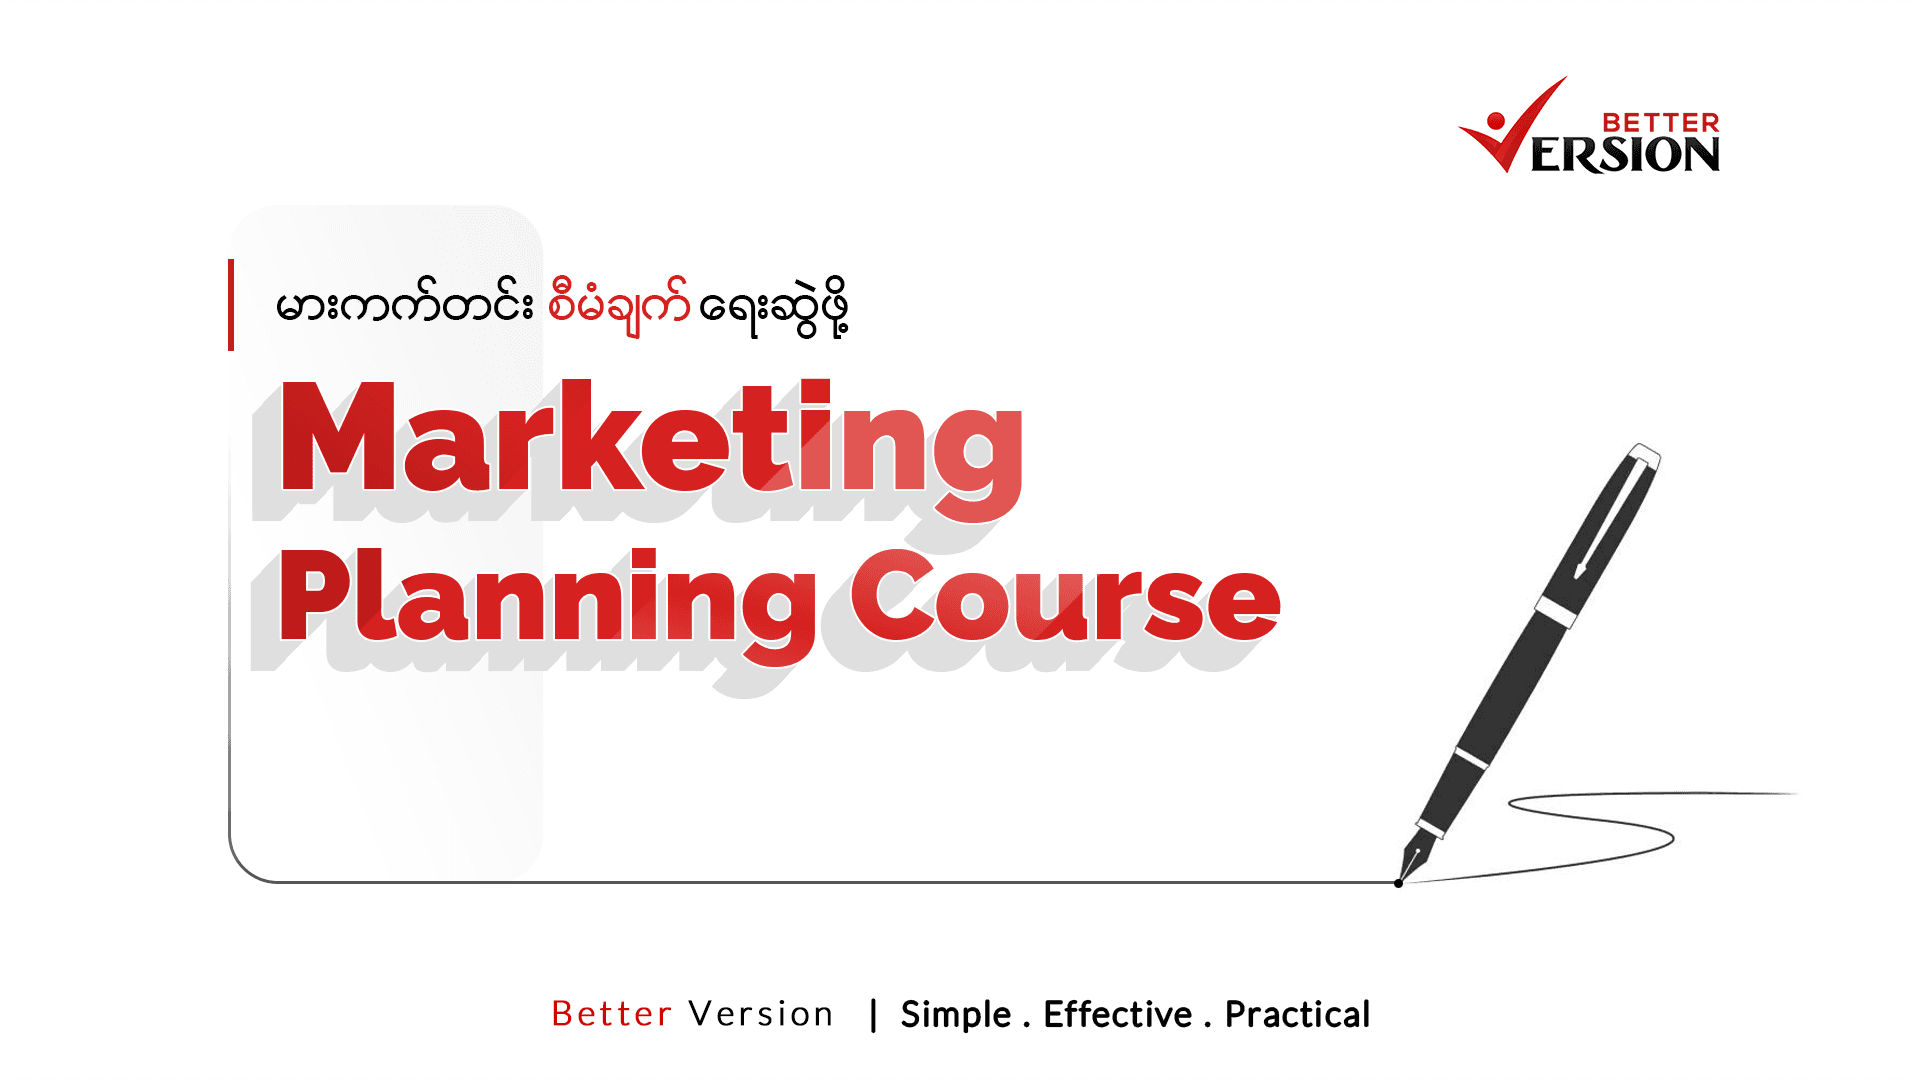 Marketing Planning - အချိန်တိုအတွင်းမှာ မားကက်တင်း စီမံချက် ရေးဆွဲနိုင်ဖို့